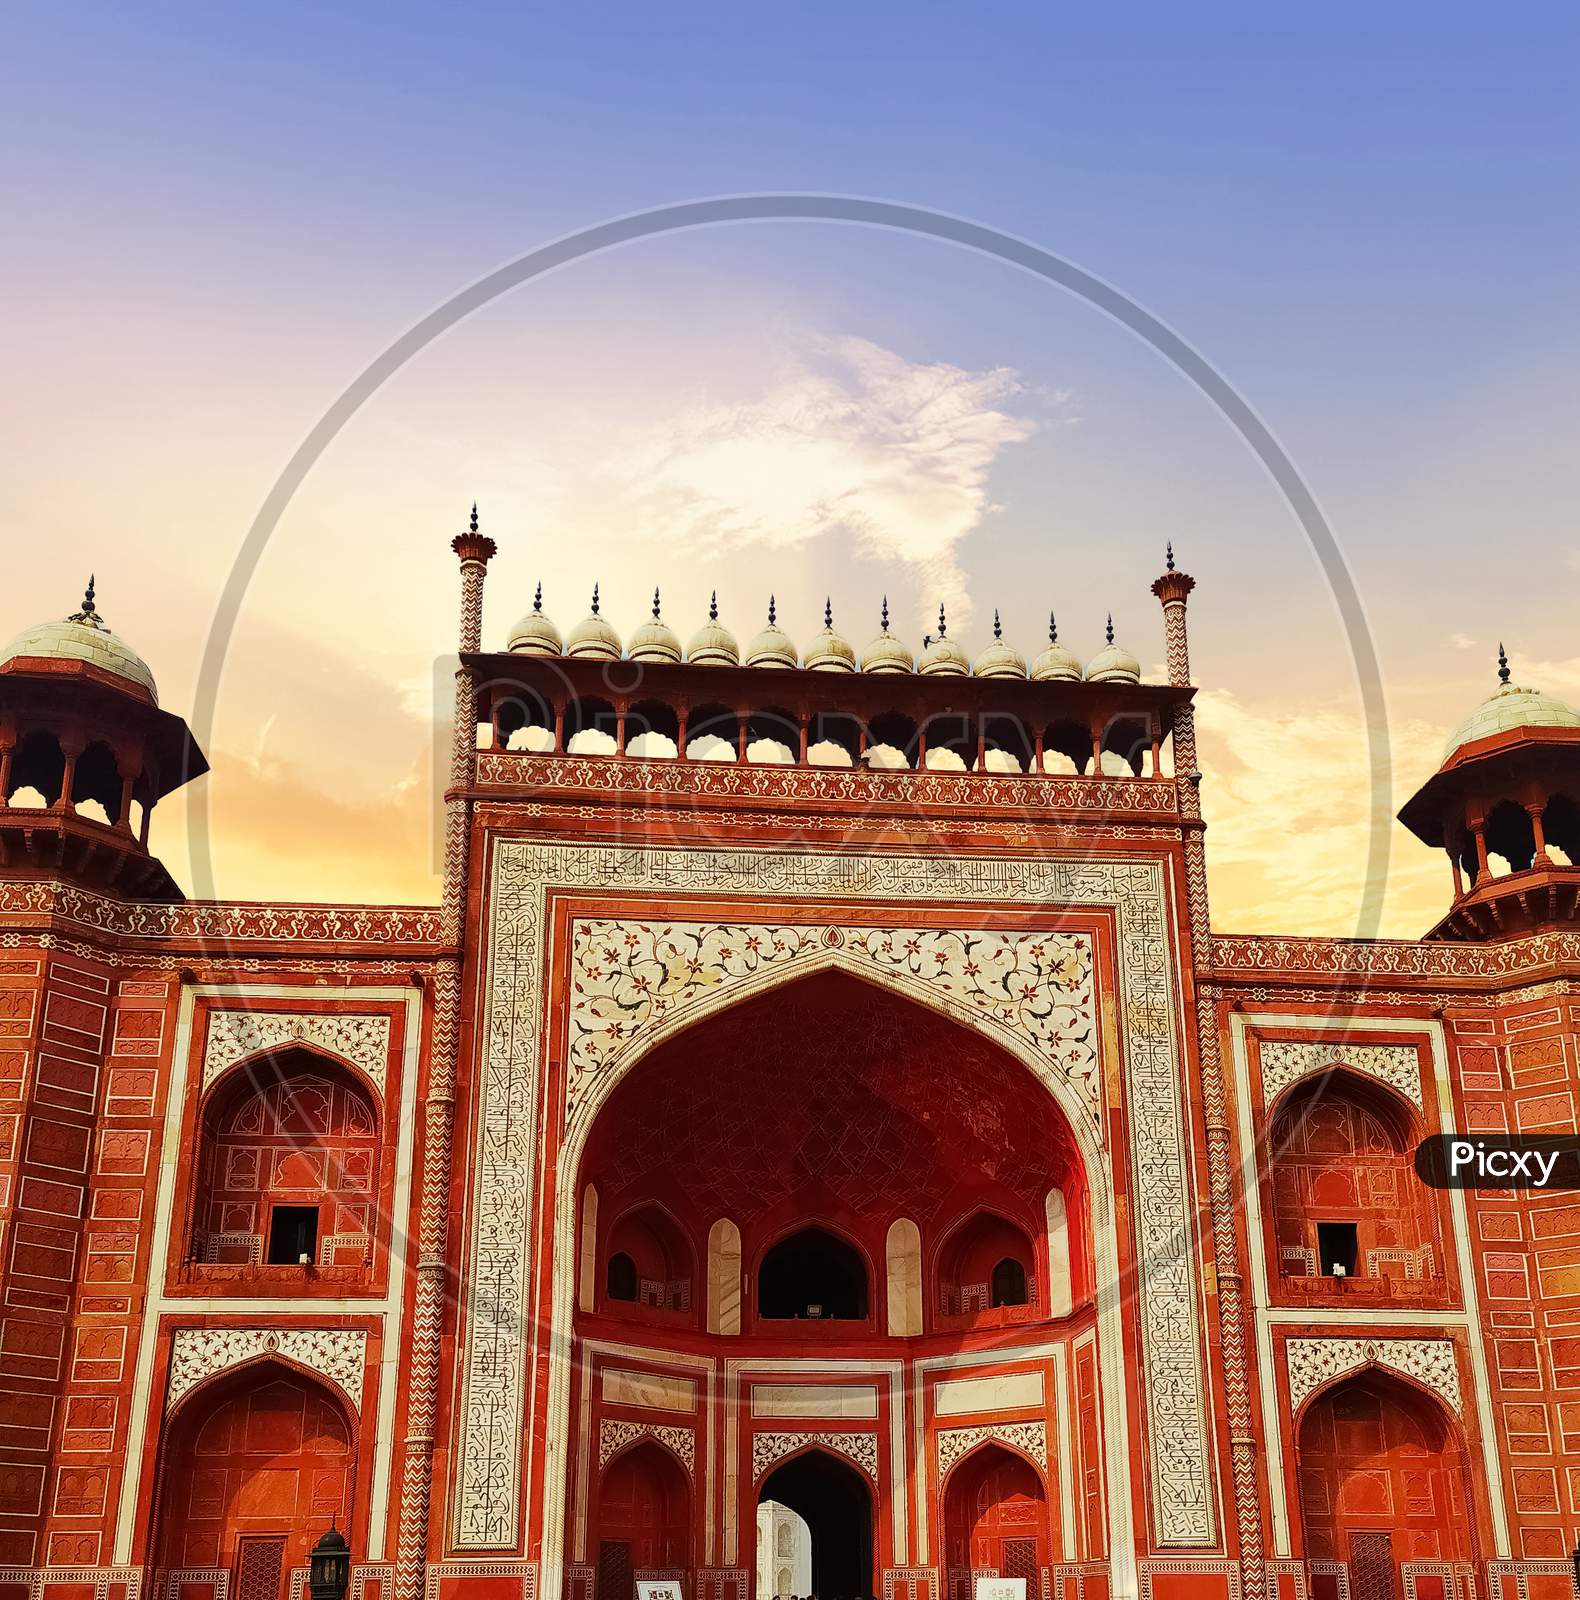 Main entrance gate of the Taj Mahal. Agra, India. It is called the Great Gate. Darwaza-i-rauza is one of the components of the Taj Mahal. sunset time